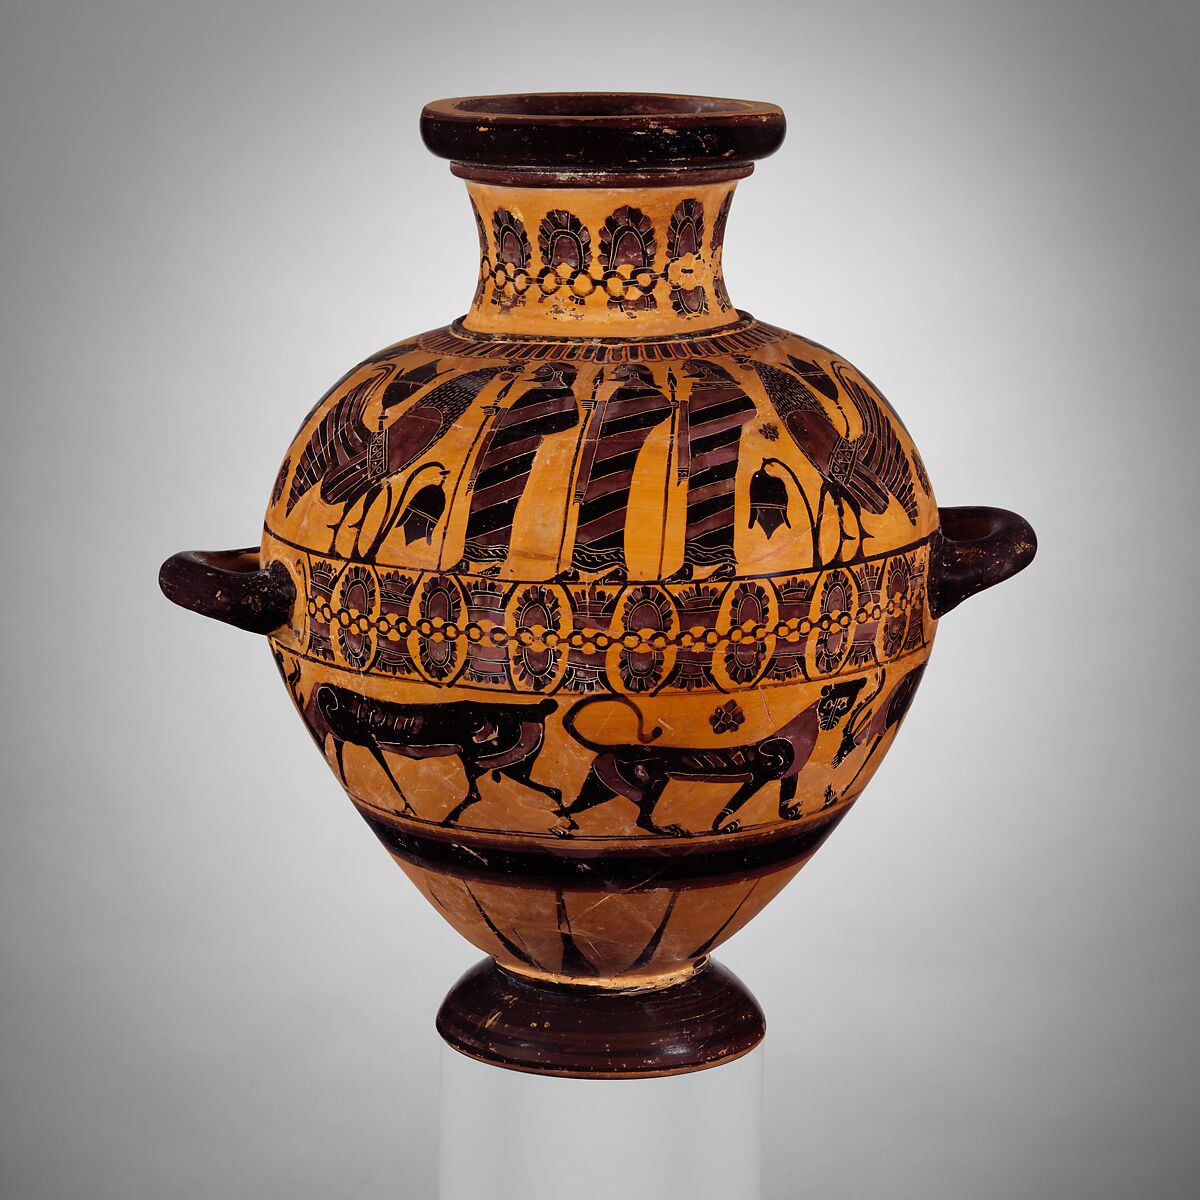 Terracotta hydria (water jar), Attributed to the Ptoon Painter, Terracotta, Greek, Attic 